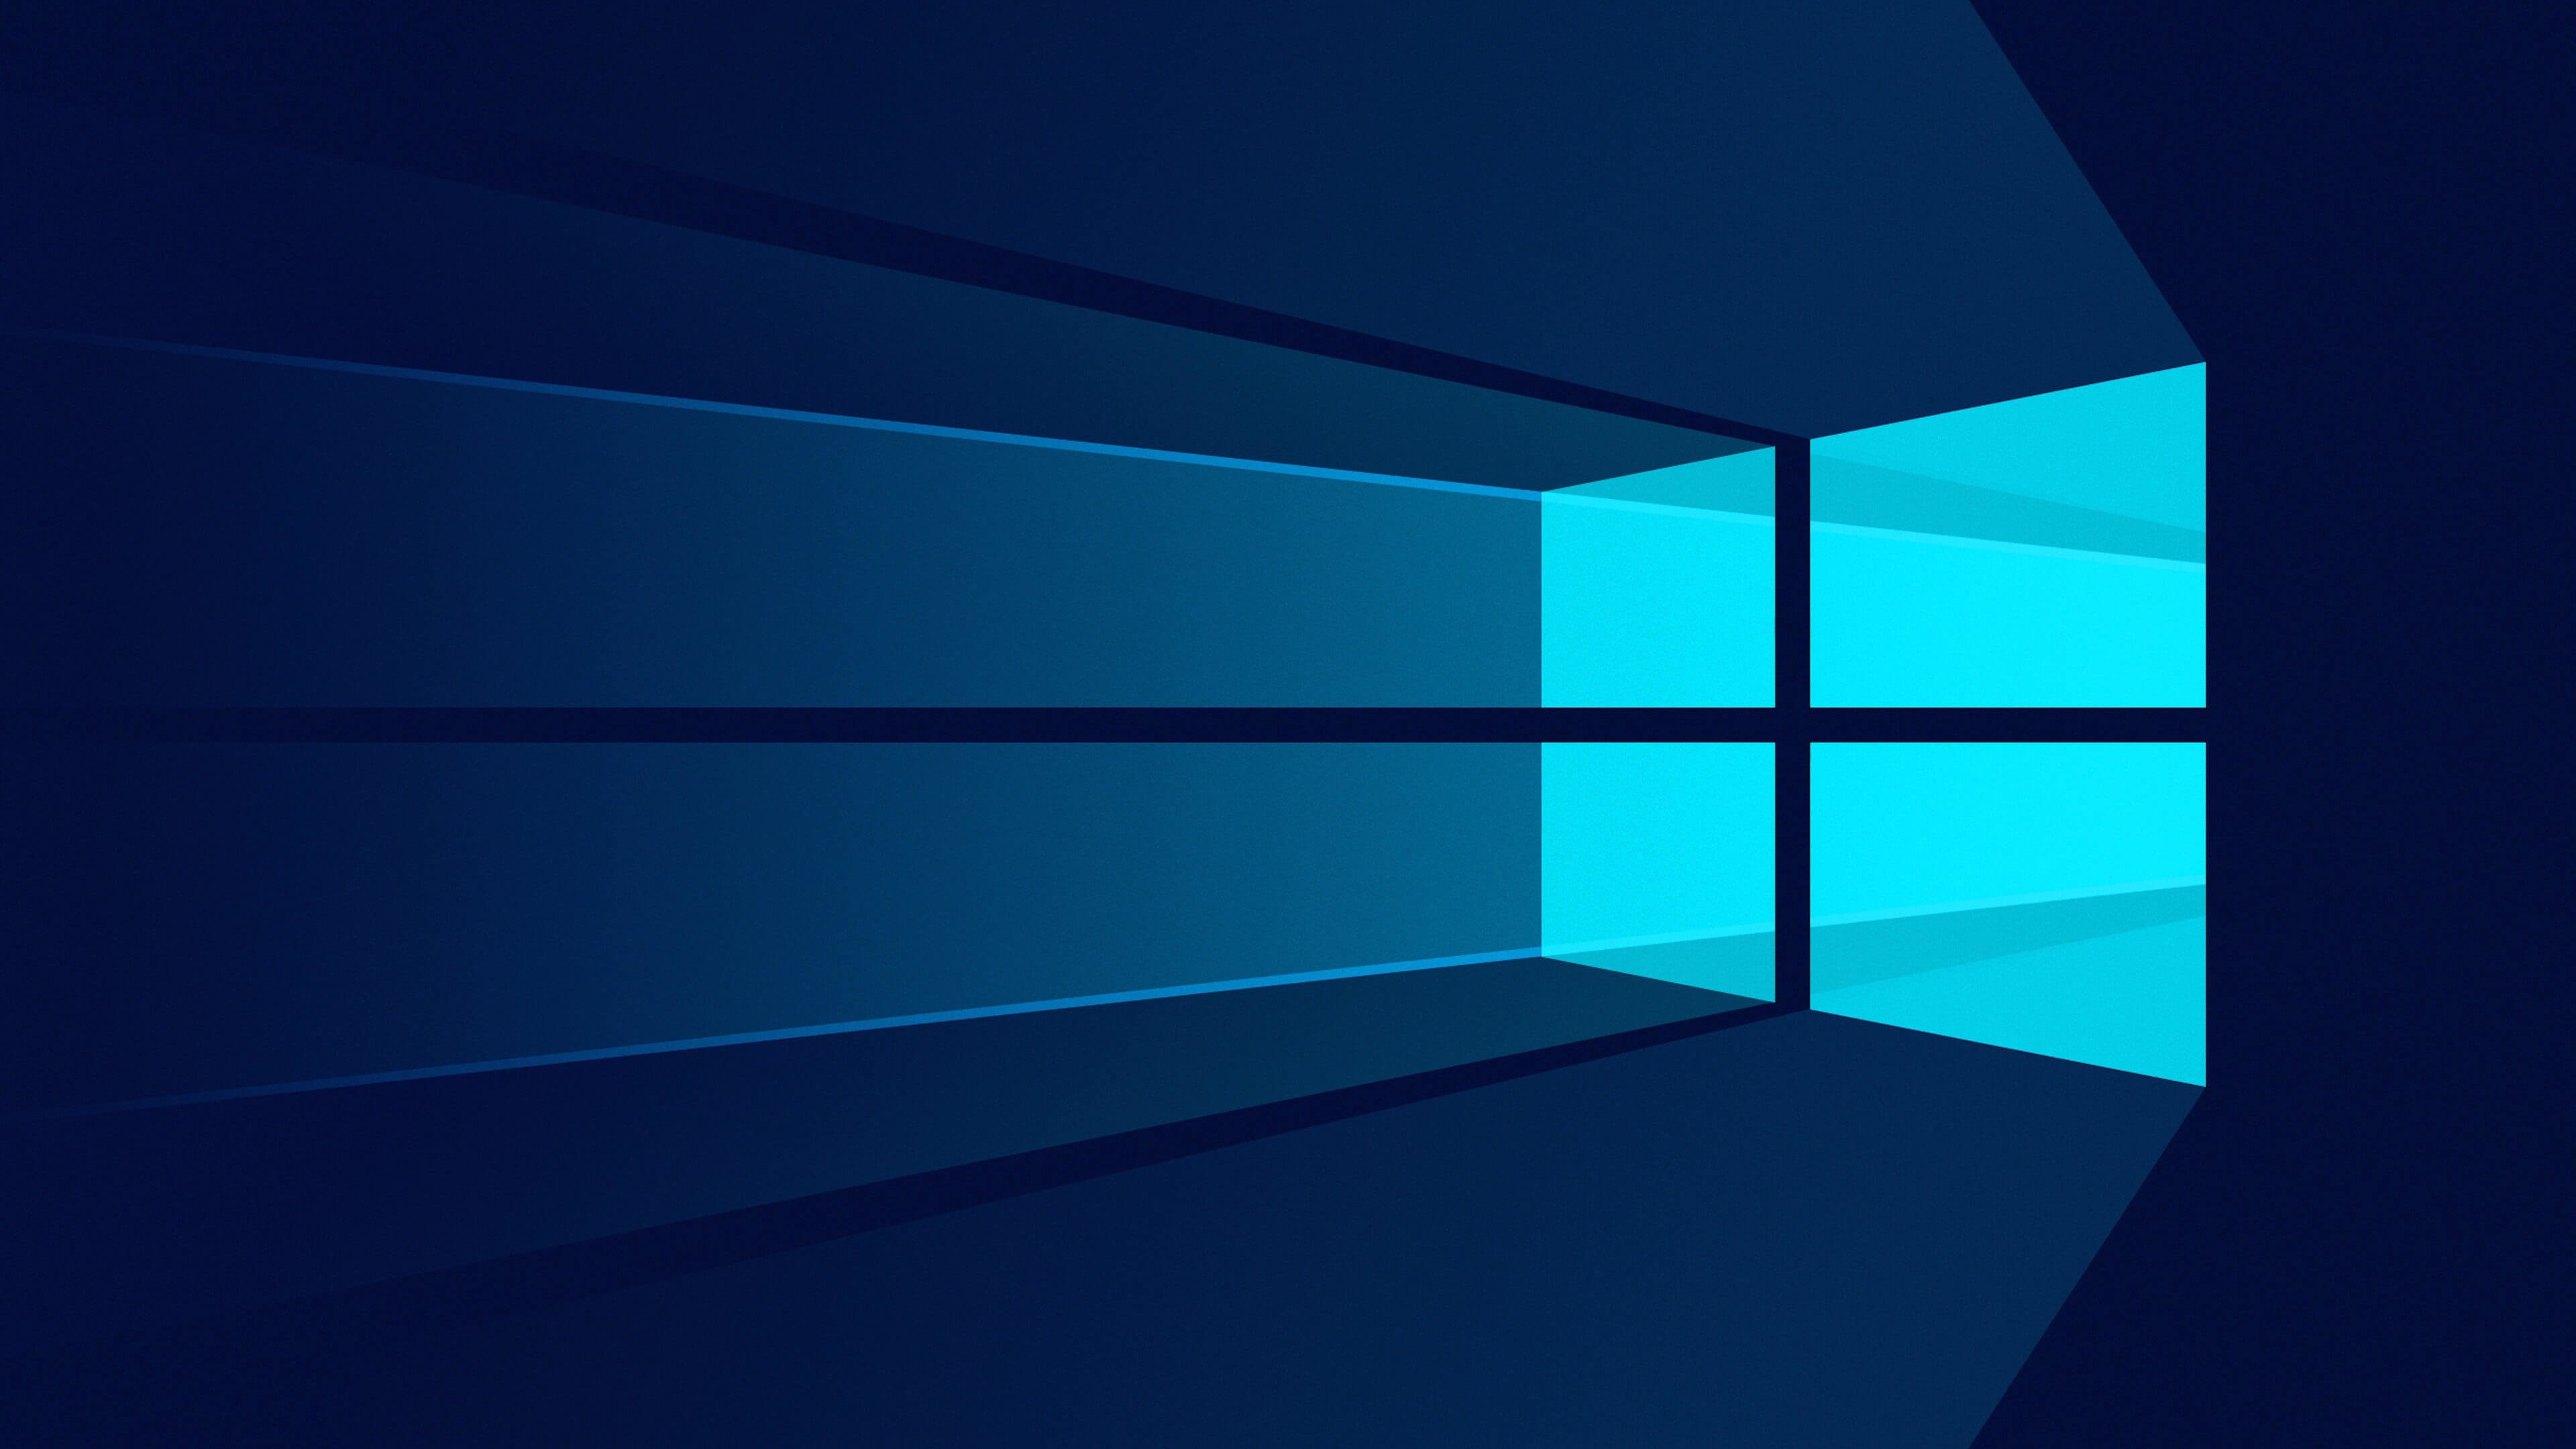 Windows 10 4k Ultra Hd Wallpaper 3840x2160 Images